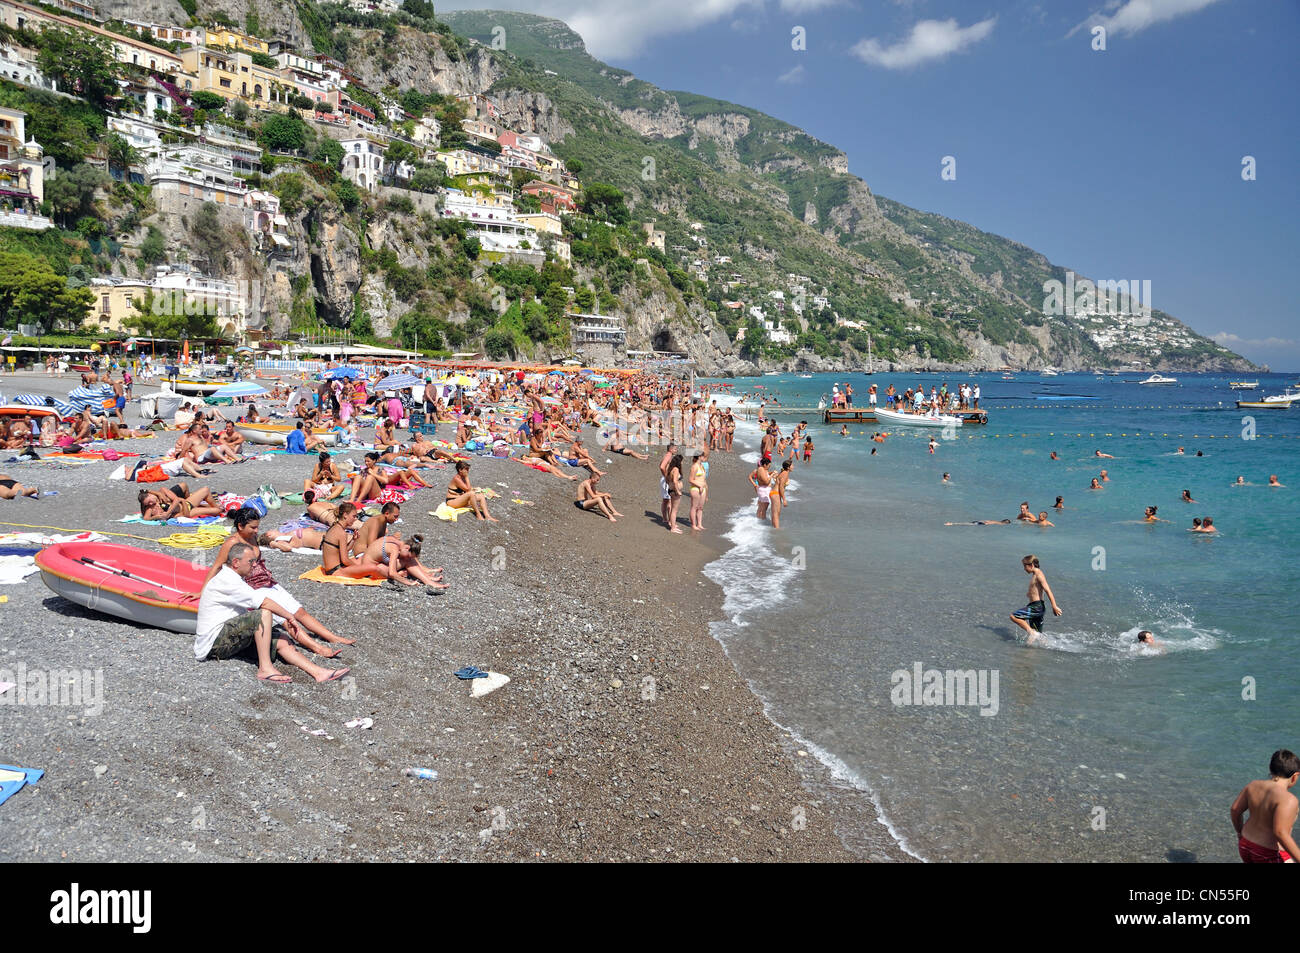 Beach scene Positano Italy Stock Photo